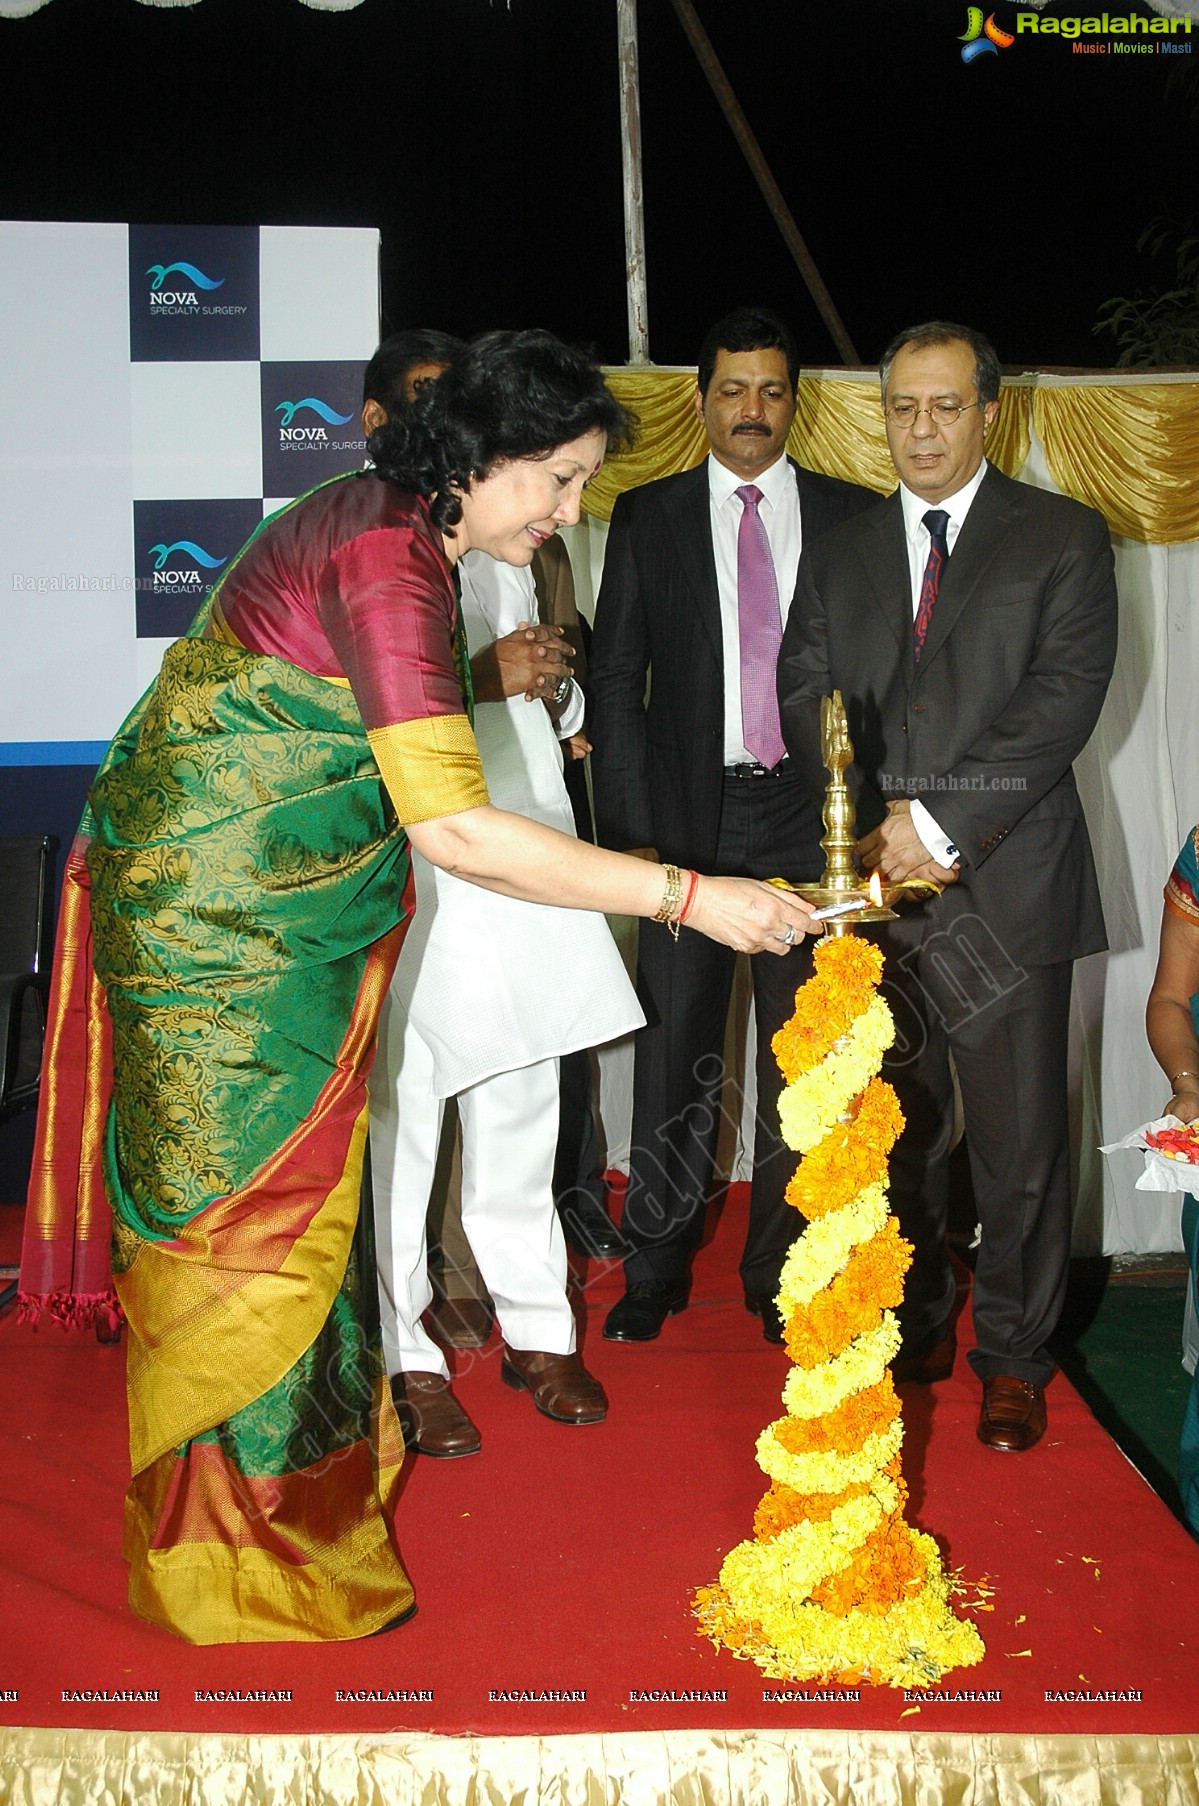 CM Kiran Kumar Reddy inaugurates Nova Specialty Surgery at Nova Medical Centers, Hyd